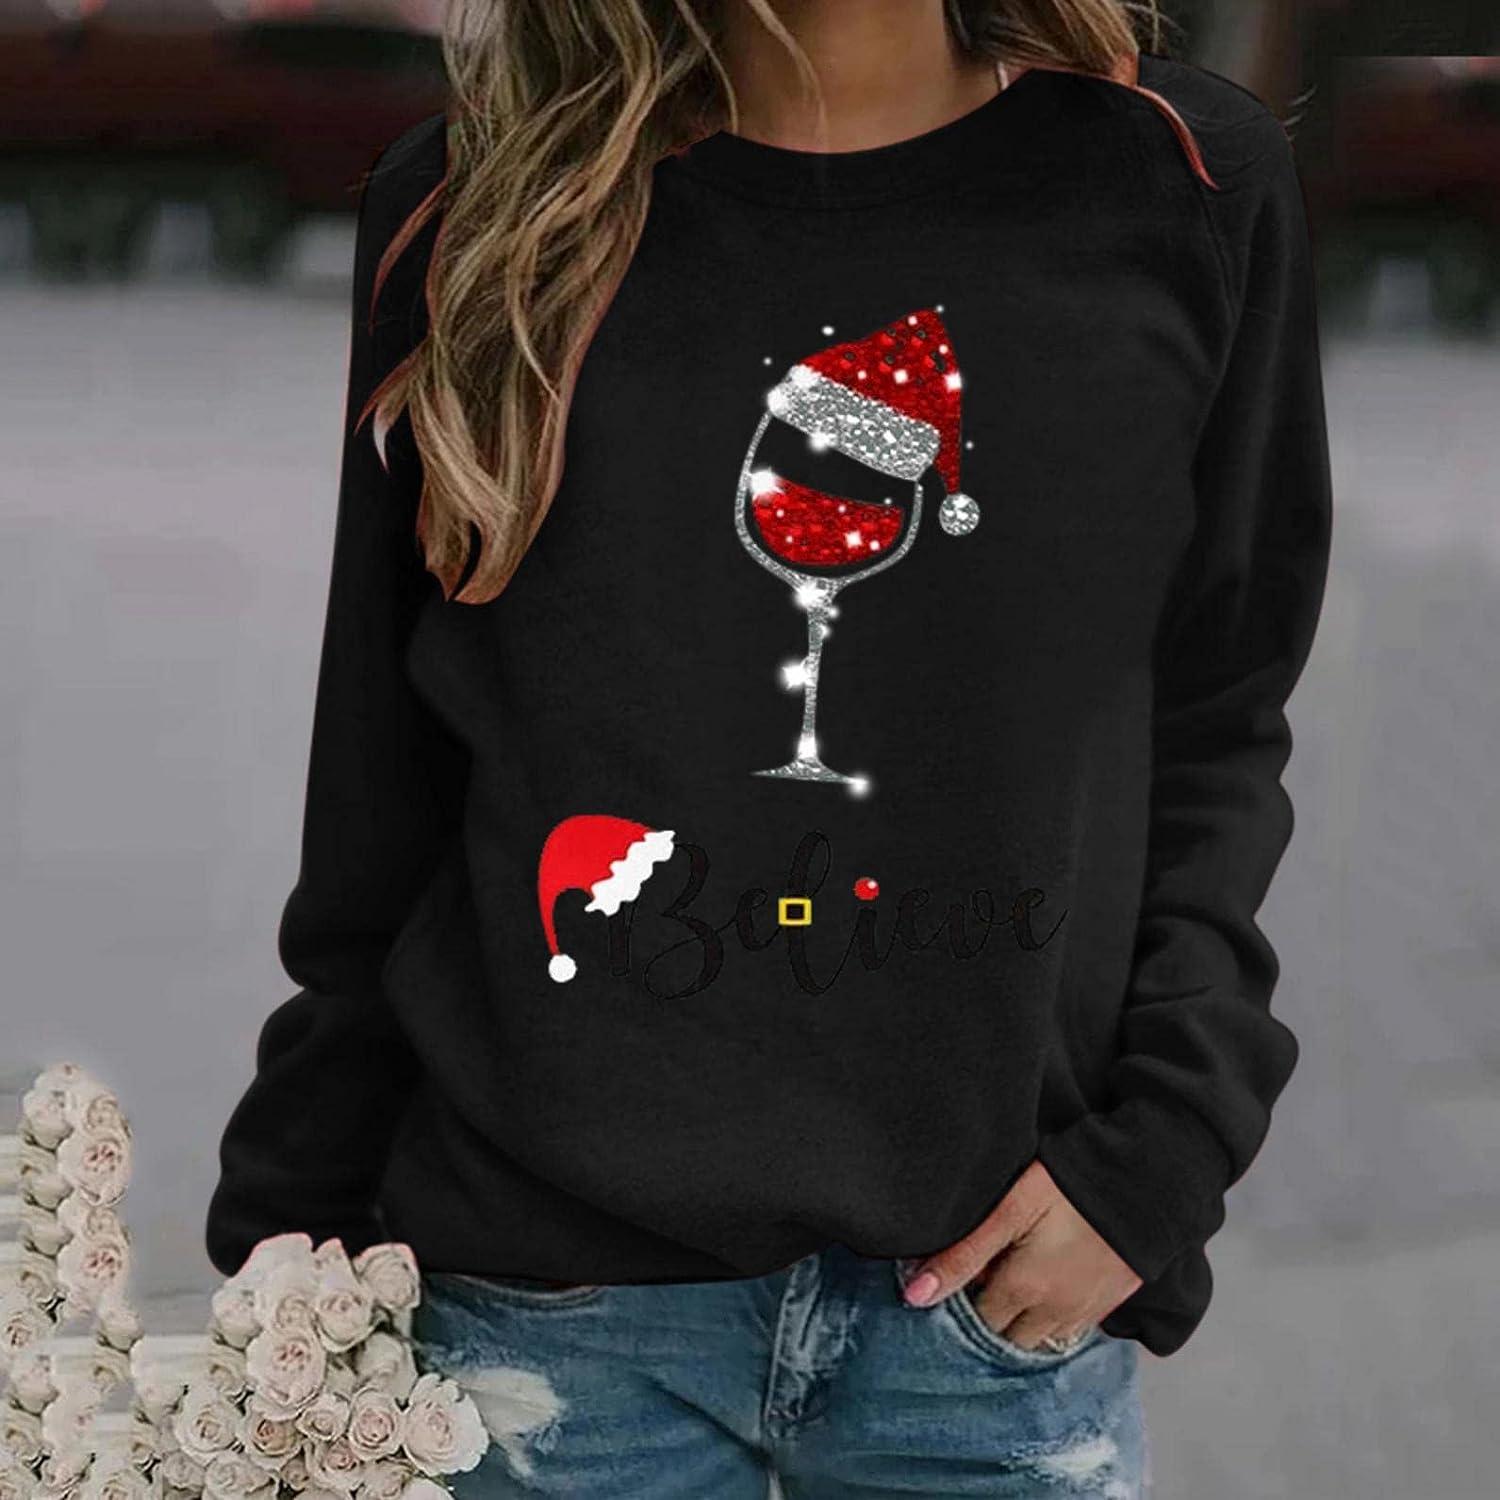 Kiasebu Fall Sweatshirts for Women, Womens Long Sleeve Tops Dressy Casual  Wine Bottle Print Christmas Shirts Pullover Sweater XX-Large Black